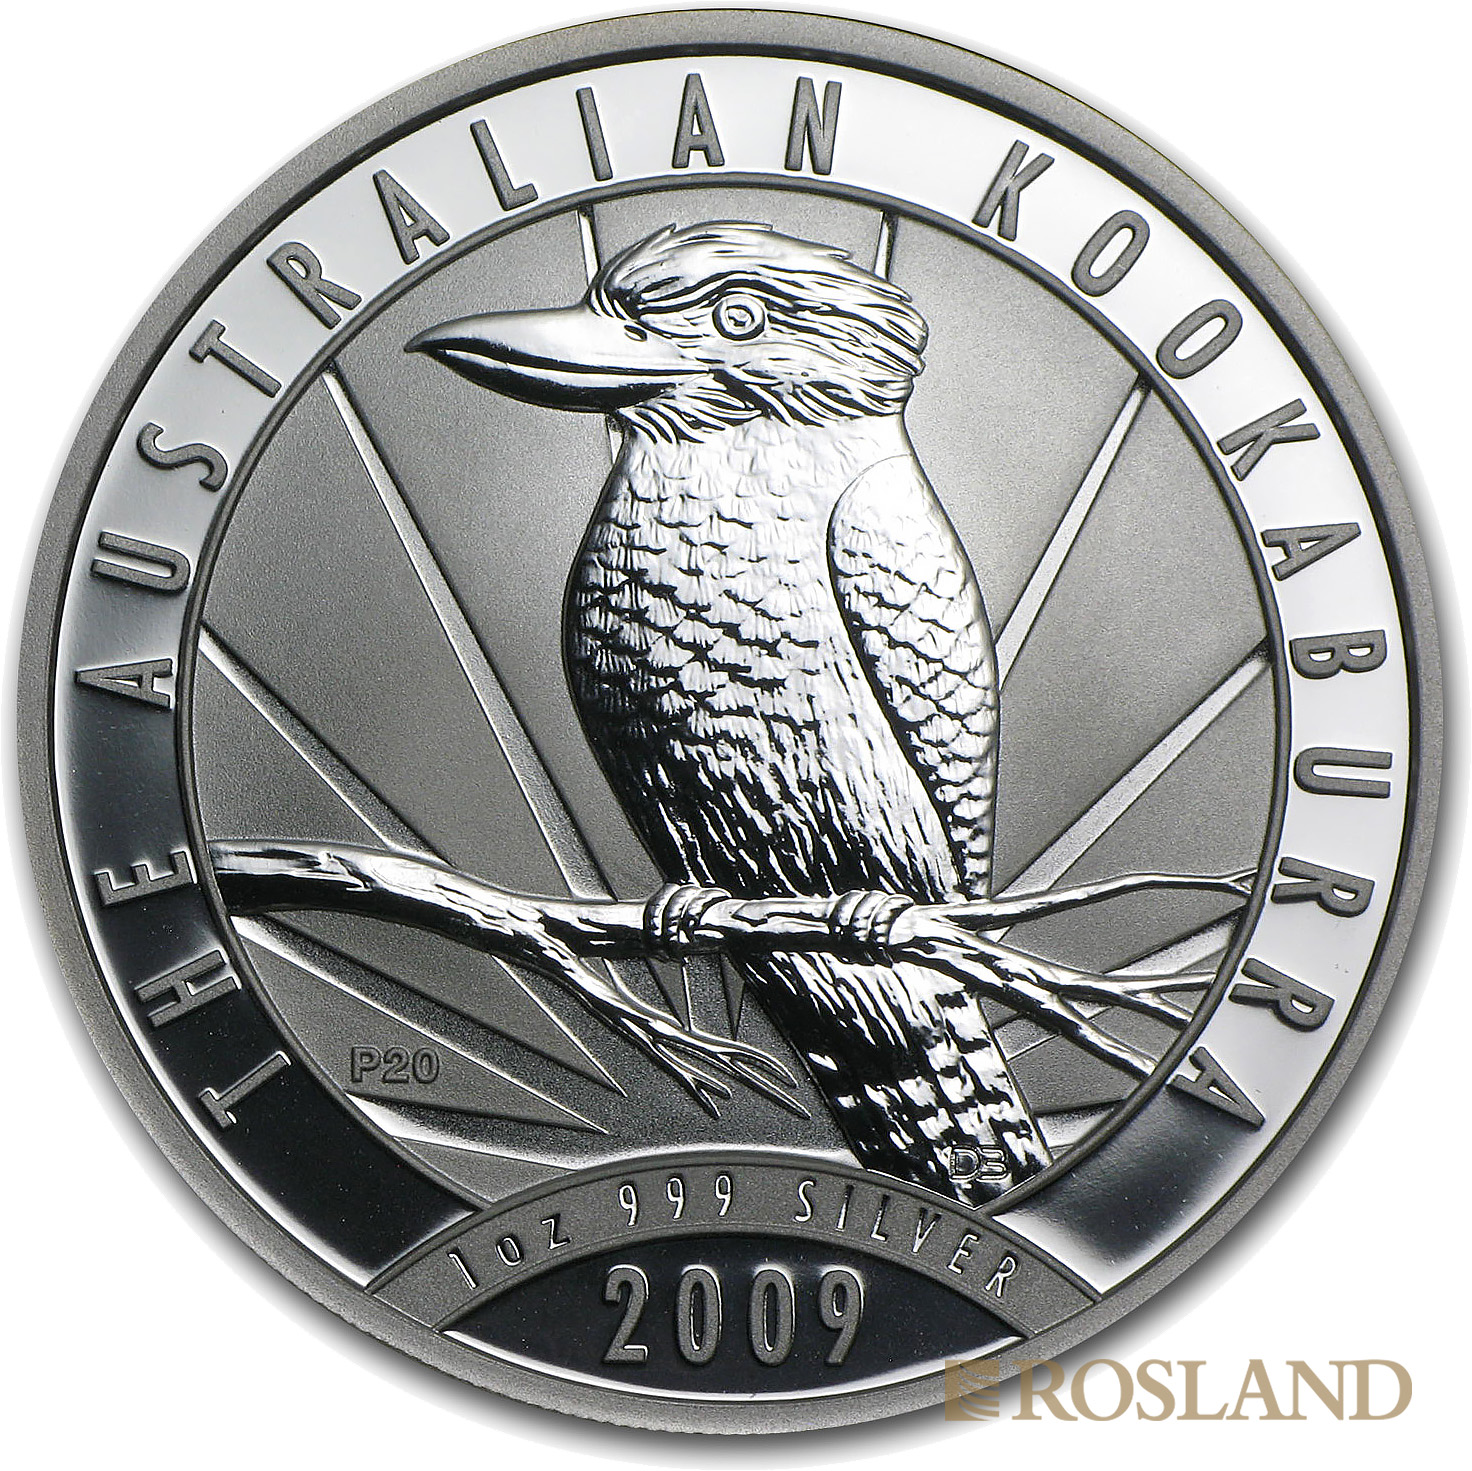 1 Unze Silbermünze Kookaburra 2009